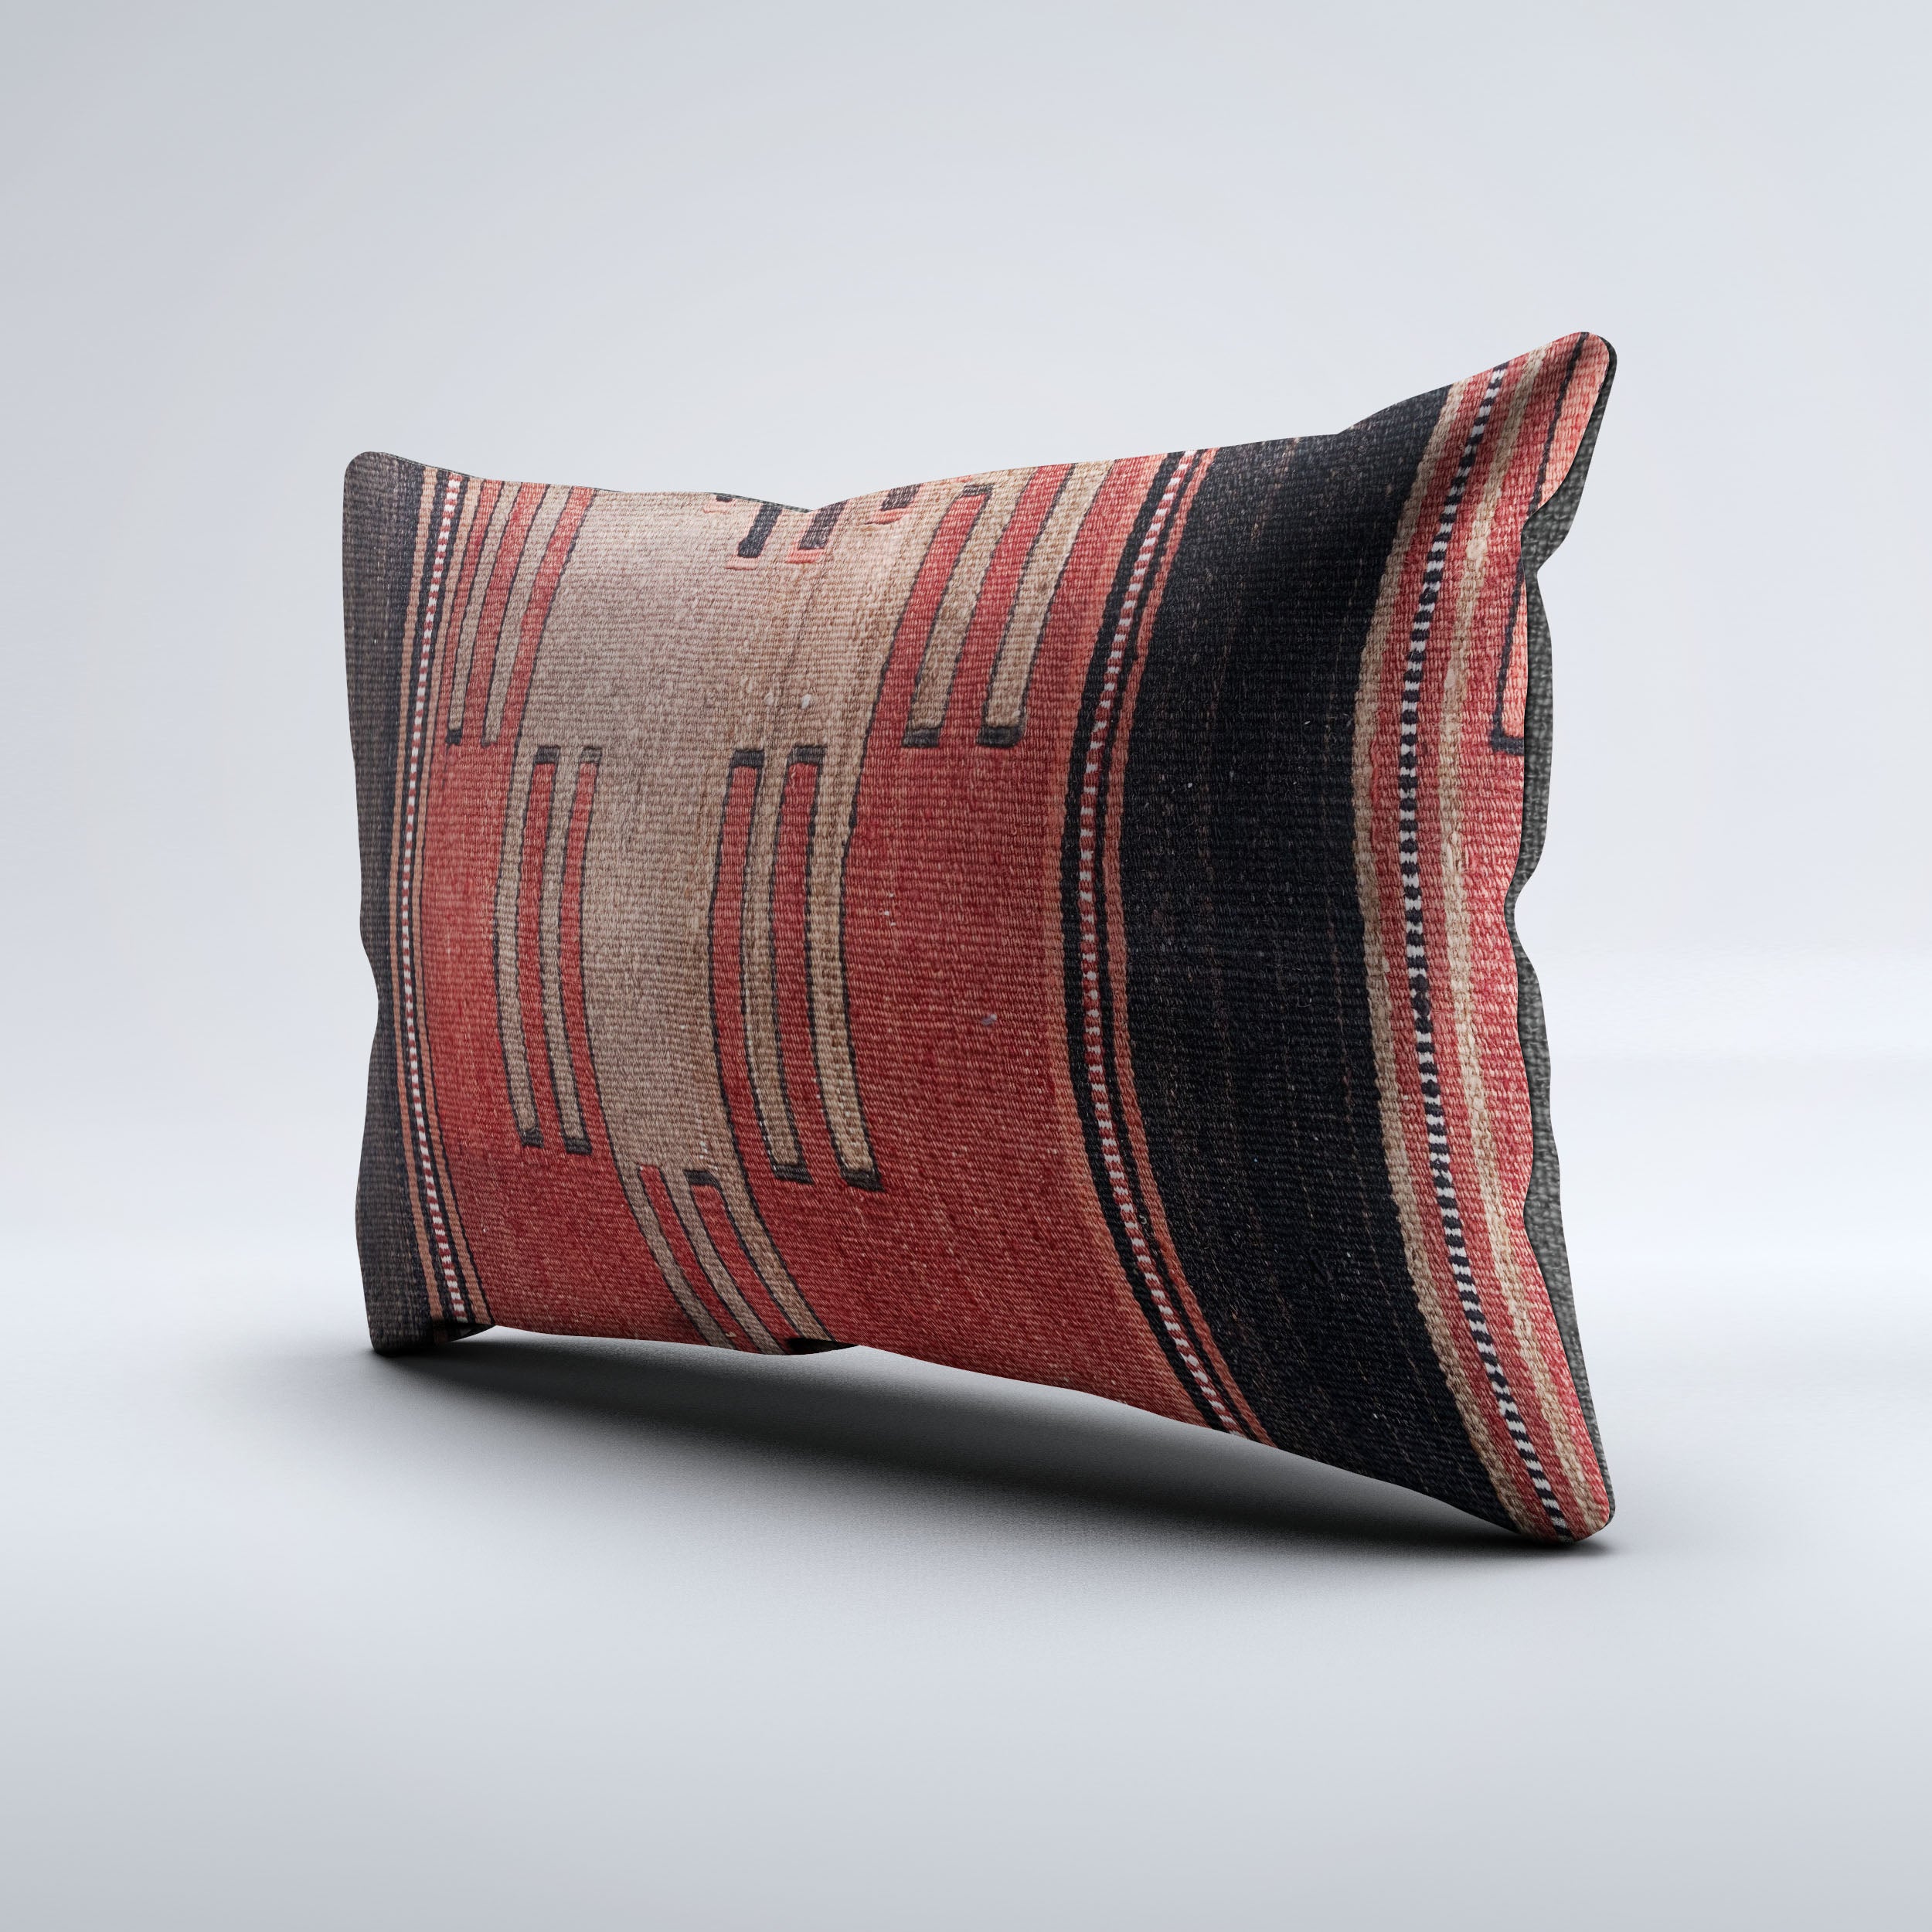 Vintage Turkish Kilim Cushion Cover 60x40 cm Square Wool Kelim Pillowcase 64793